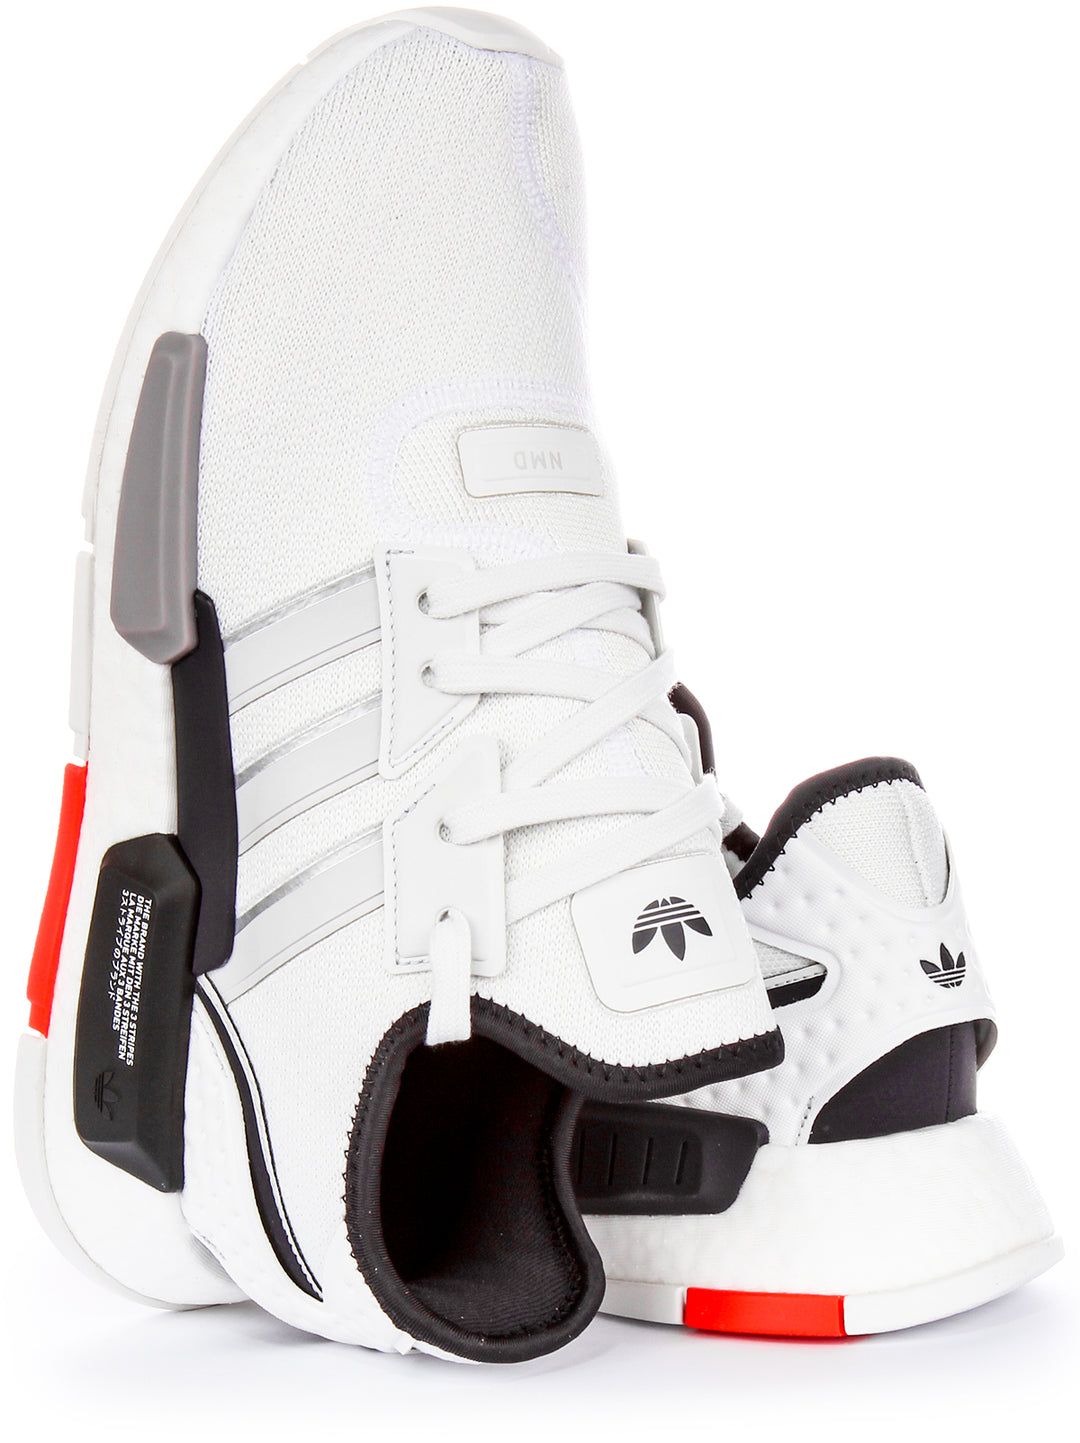 Adidas NMD_G1 80s Running Knit Soft Feel Snl Herren Mesh Sneaker in Weiß